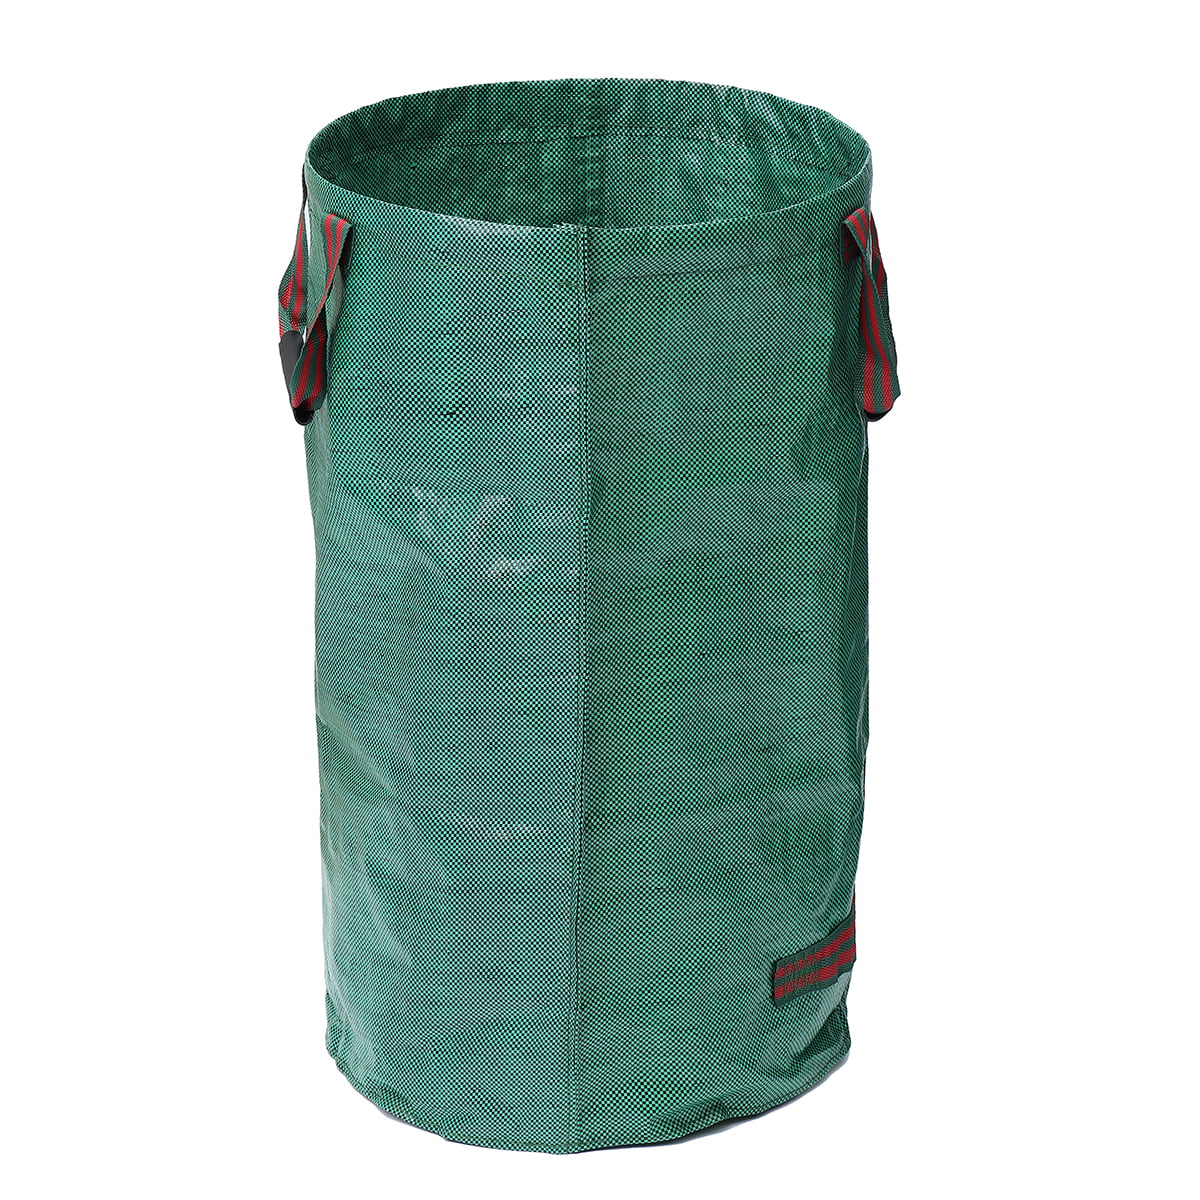 Reusable Portable Duty Waste Bag Refuse Sack Waterproof Garden Leaves Grass Bin 